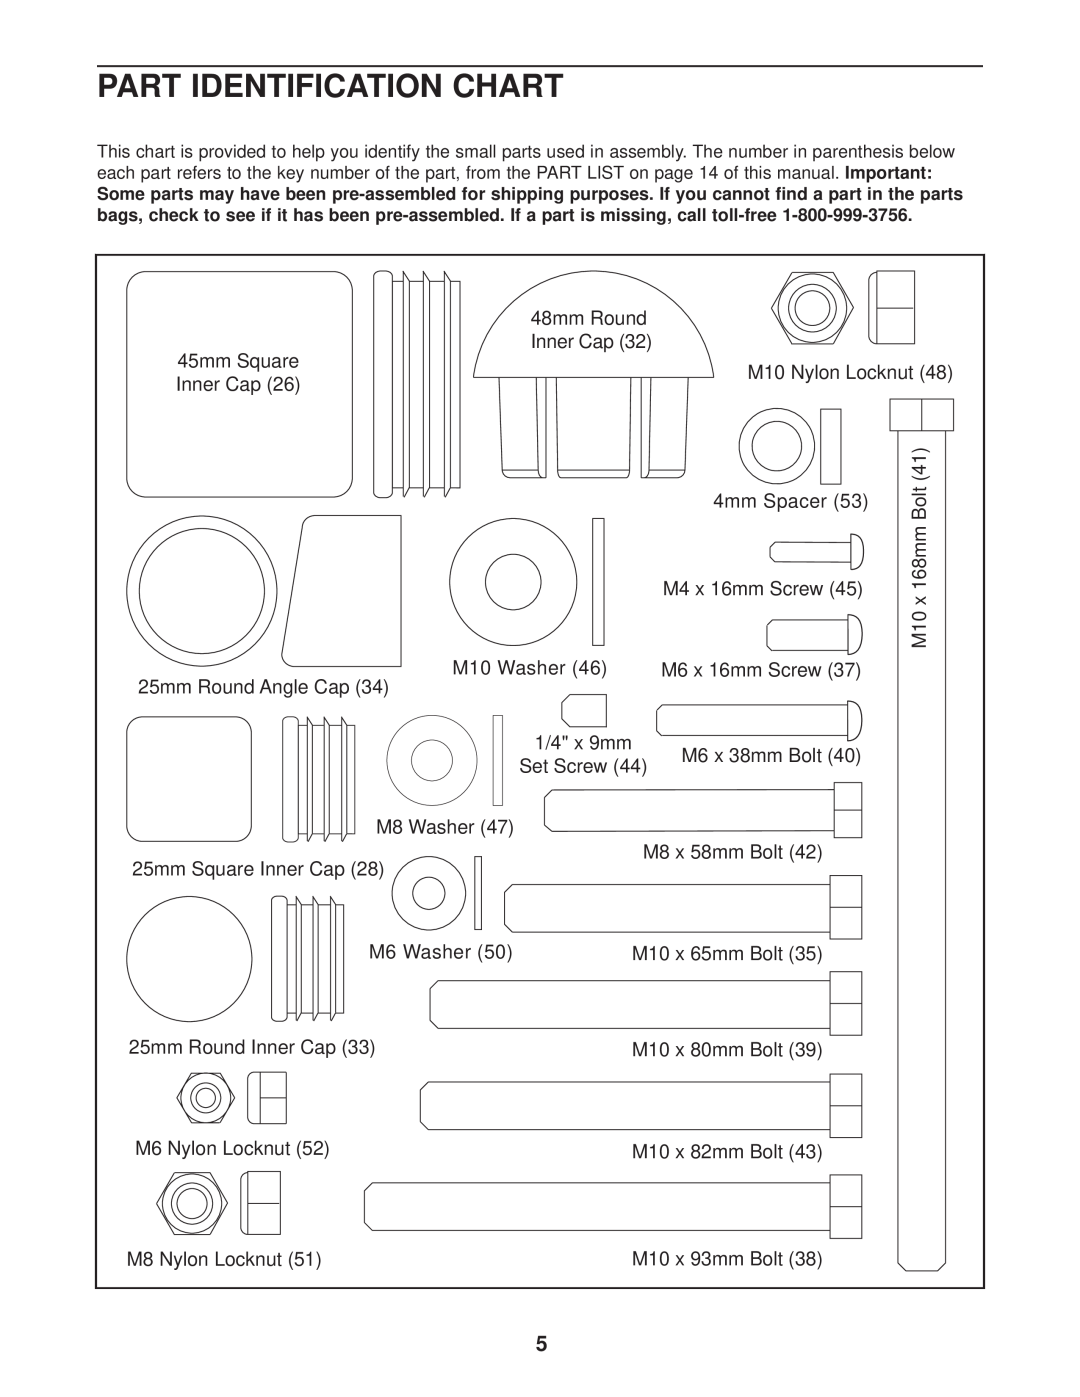 Weider 831.150310 user manual Part Identification Chart, M6 x 16mm Screw 